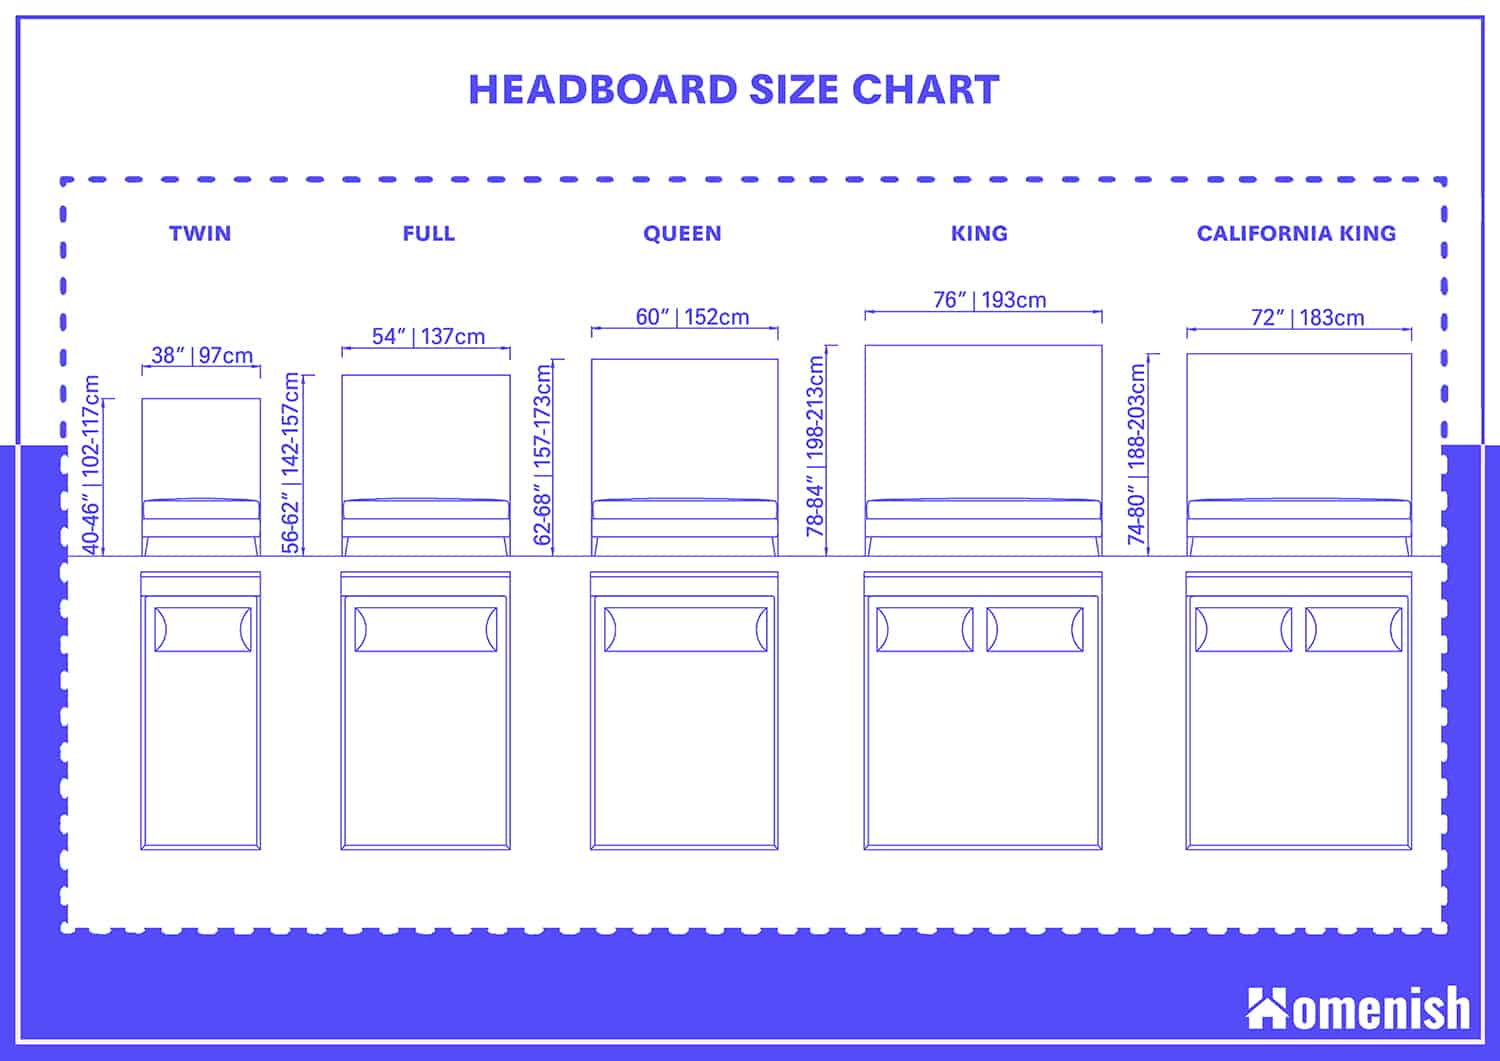 Standard Headboard Dimensions, Width Of King Bed Headboard